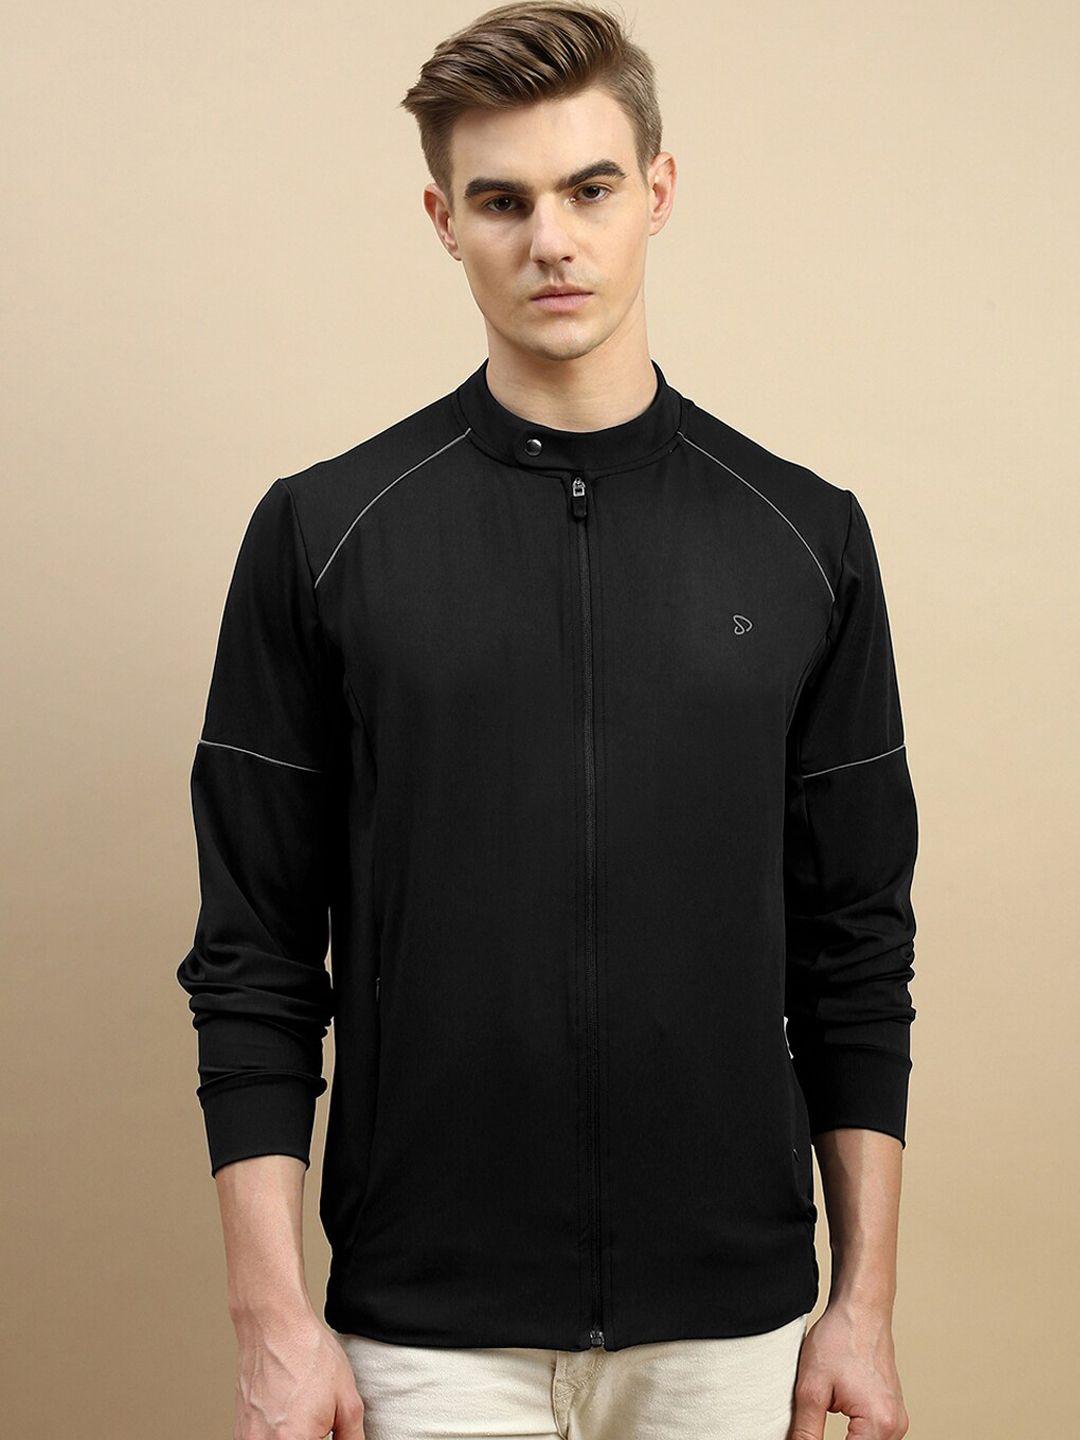 sporto men black geometric lightweight outdoor sporty jacket with